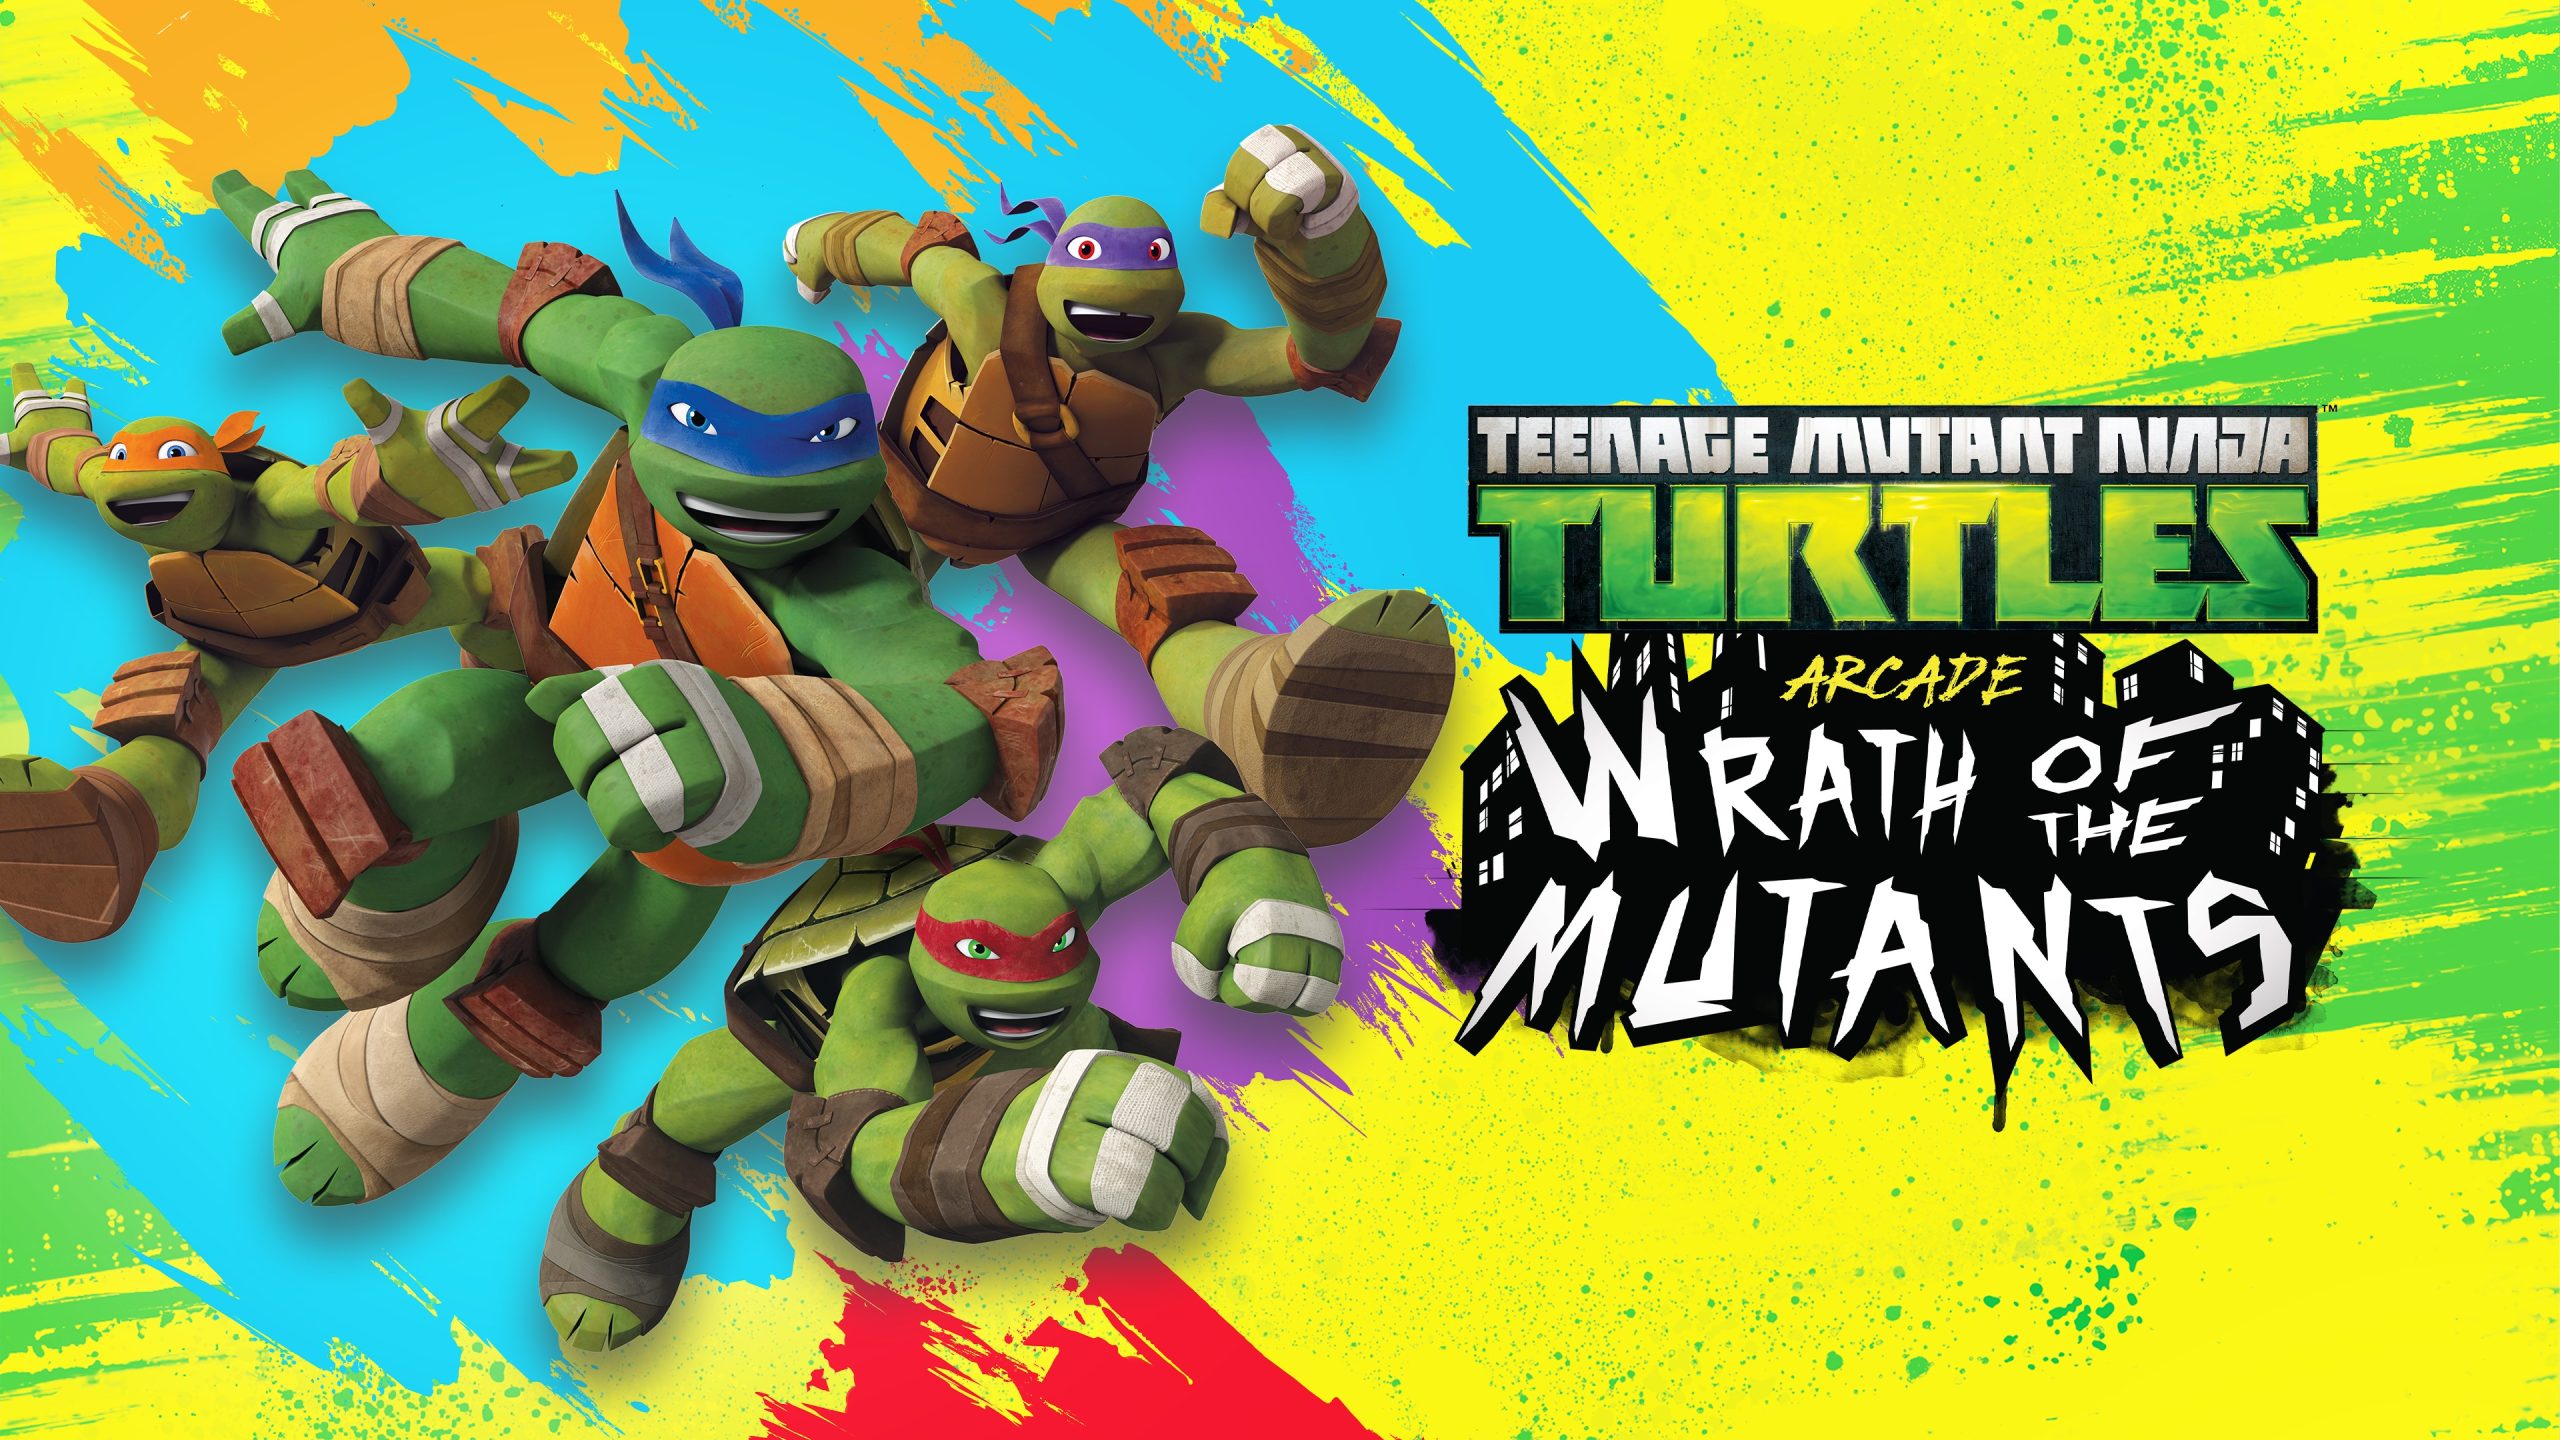 Teenage Mutant Ninja Turtles Arcade: Recensione Wrath of the Mutants – Completamente dimenticabile